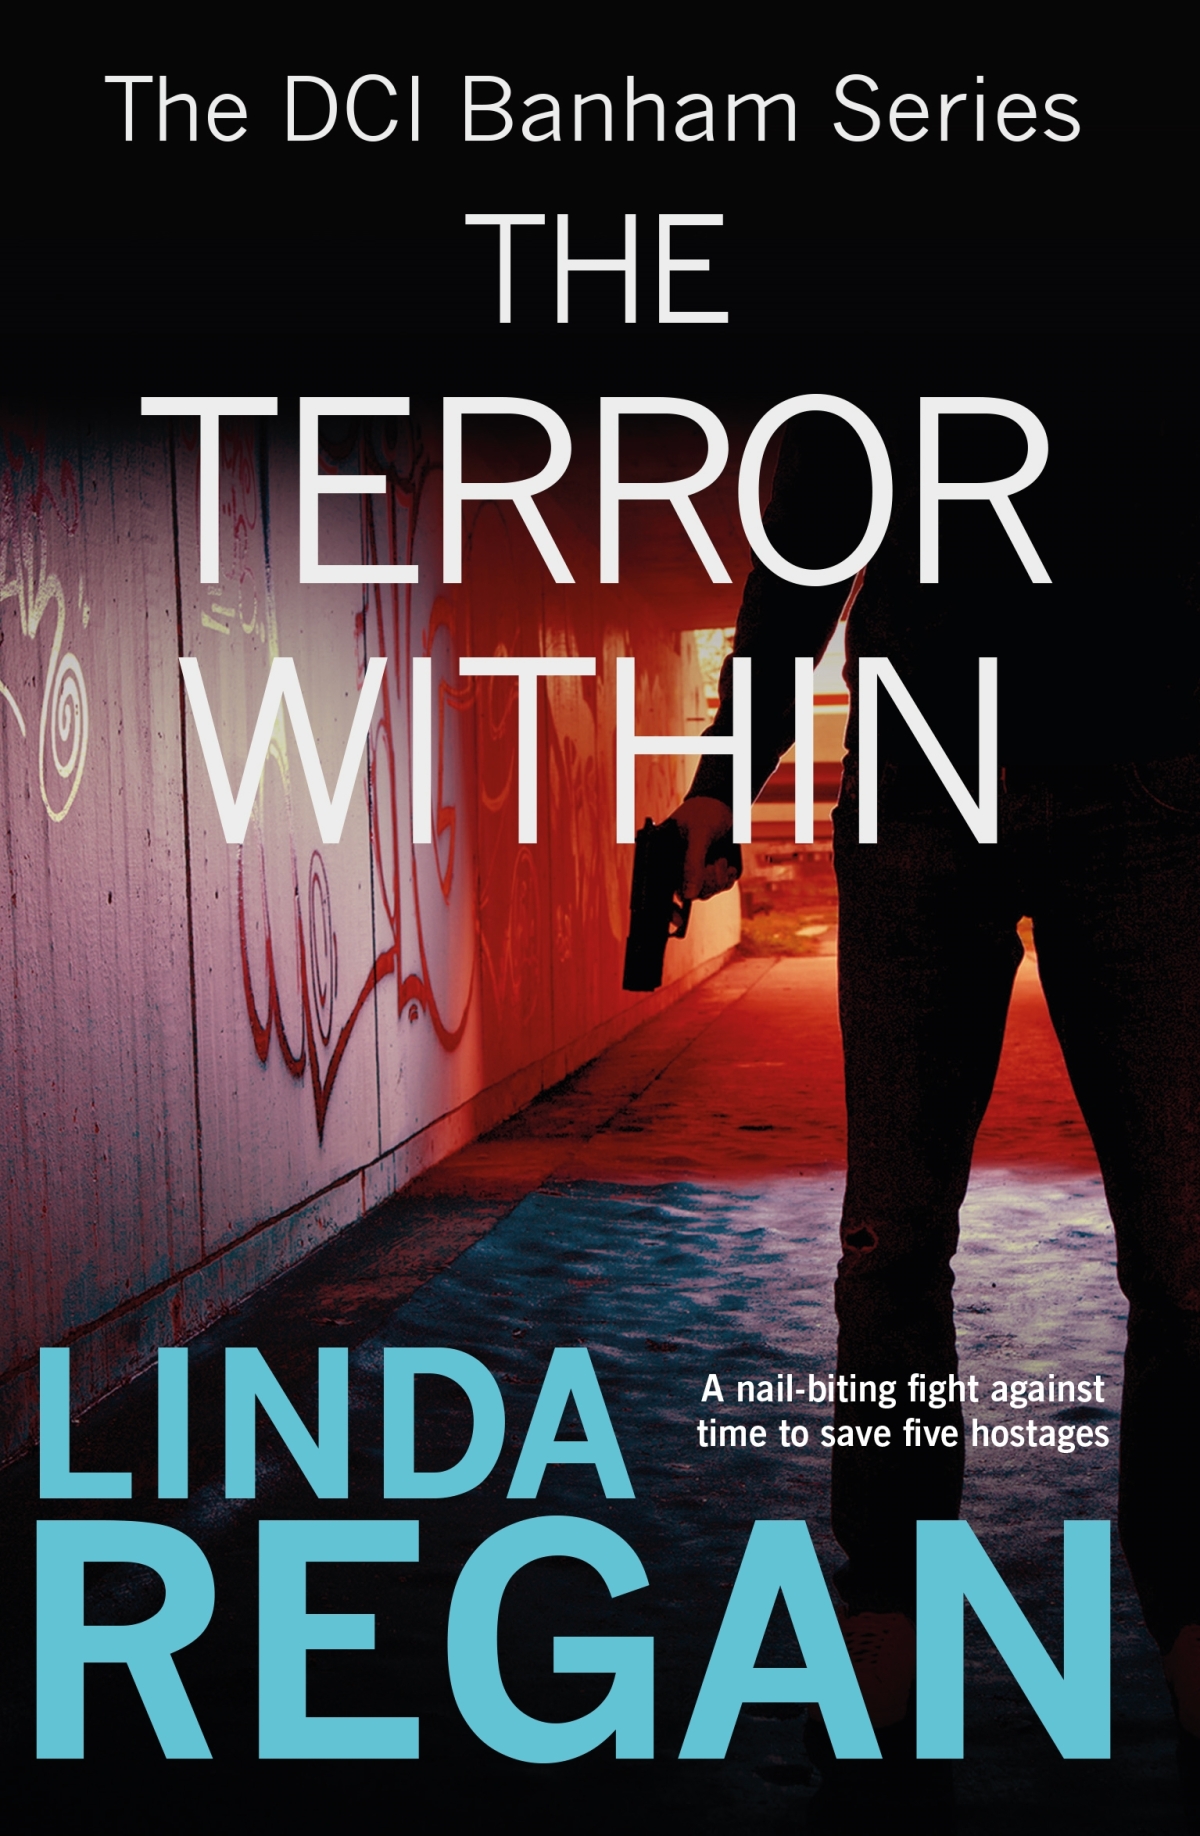 The Terror Within (The DCI Banham Series) by Linda Regan #AuthorInterview #TheTerrorWithin @Linda_Regan @AccentPress @damppebbles #damppebblesblogtours #Promo